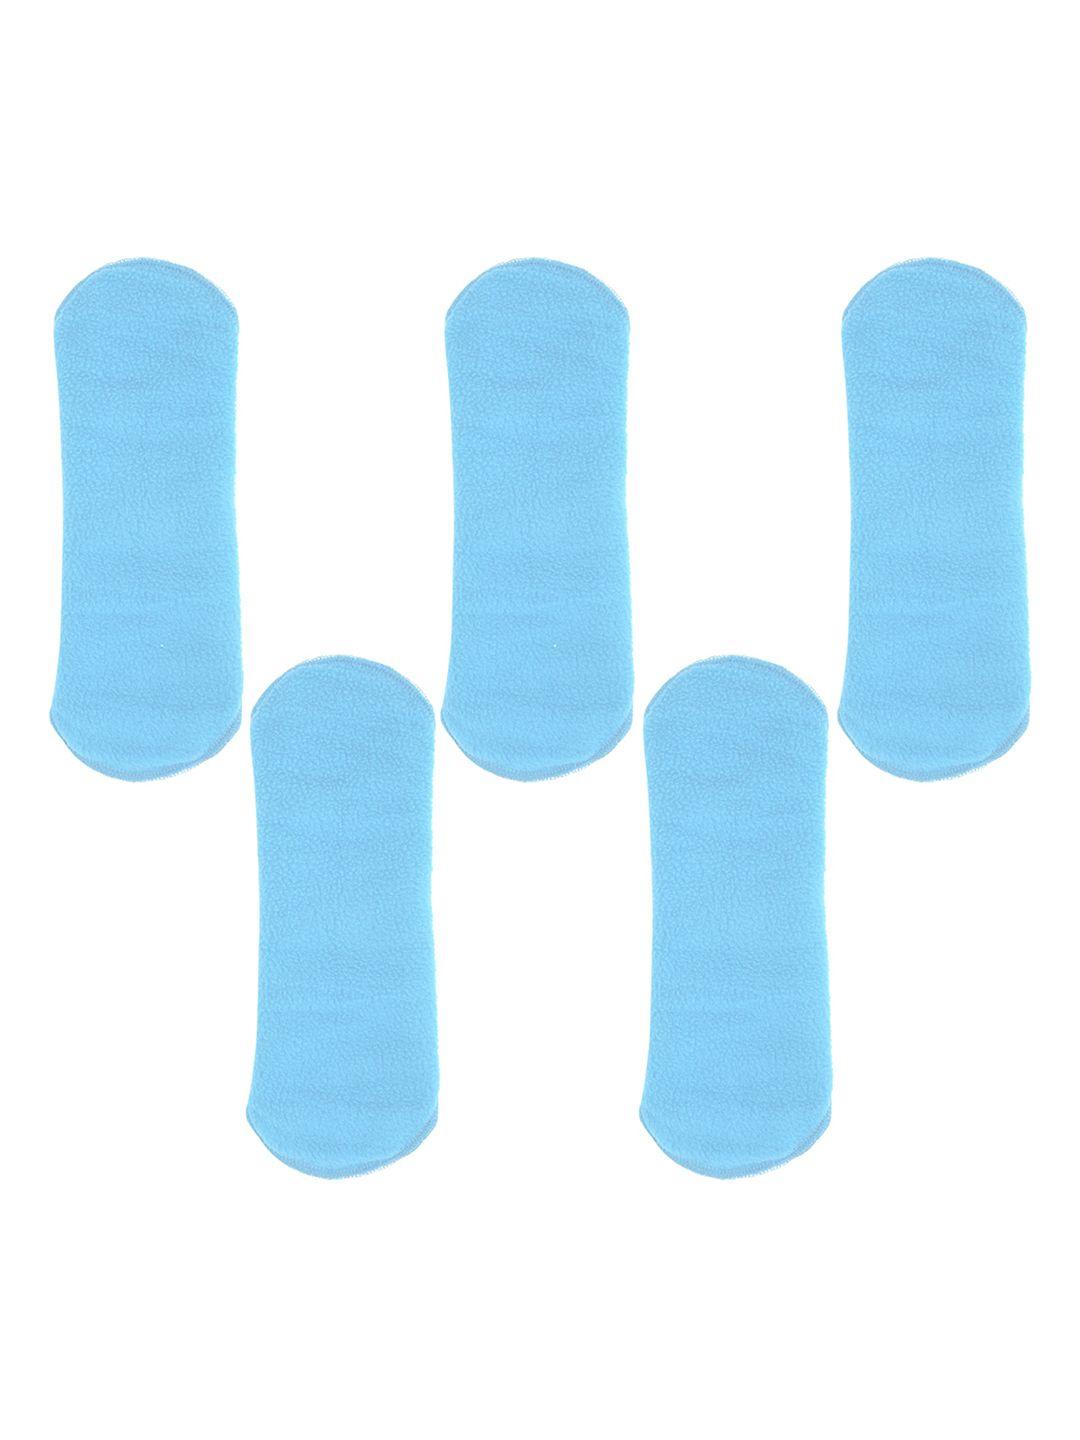 caredone set of 5 reusable & washable cotton sanitary cloth pads